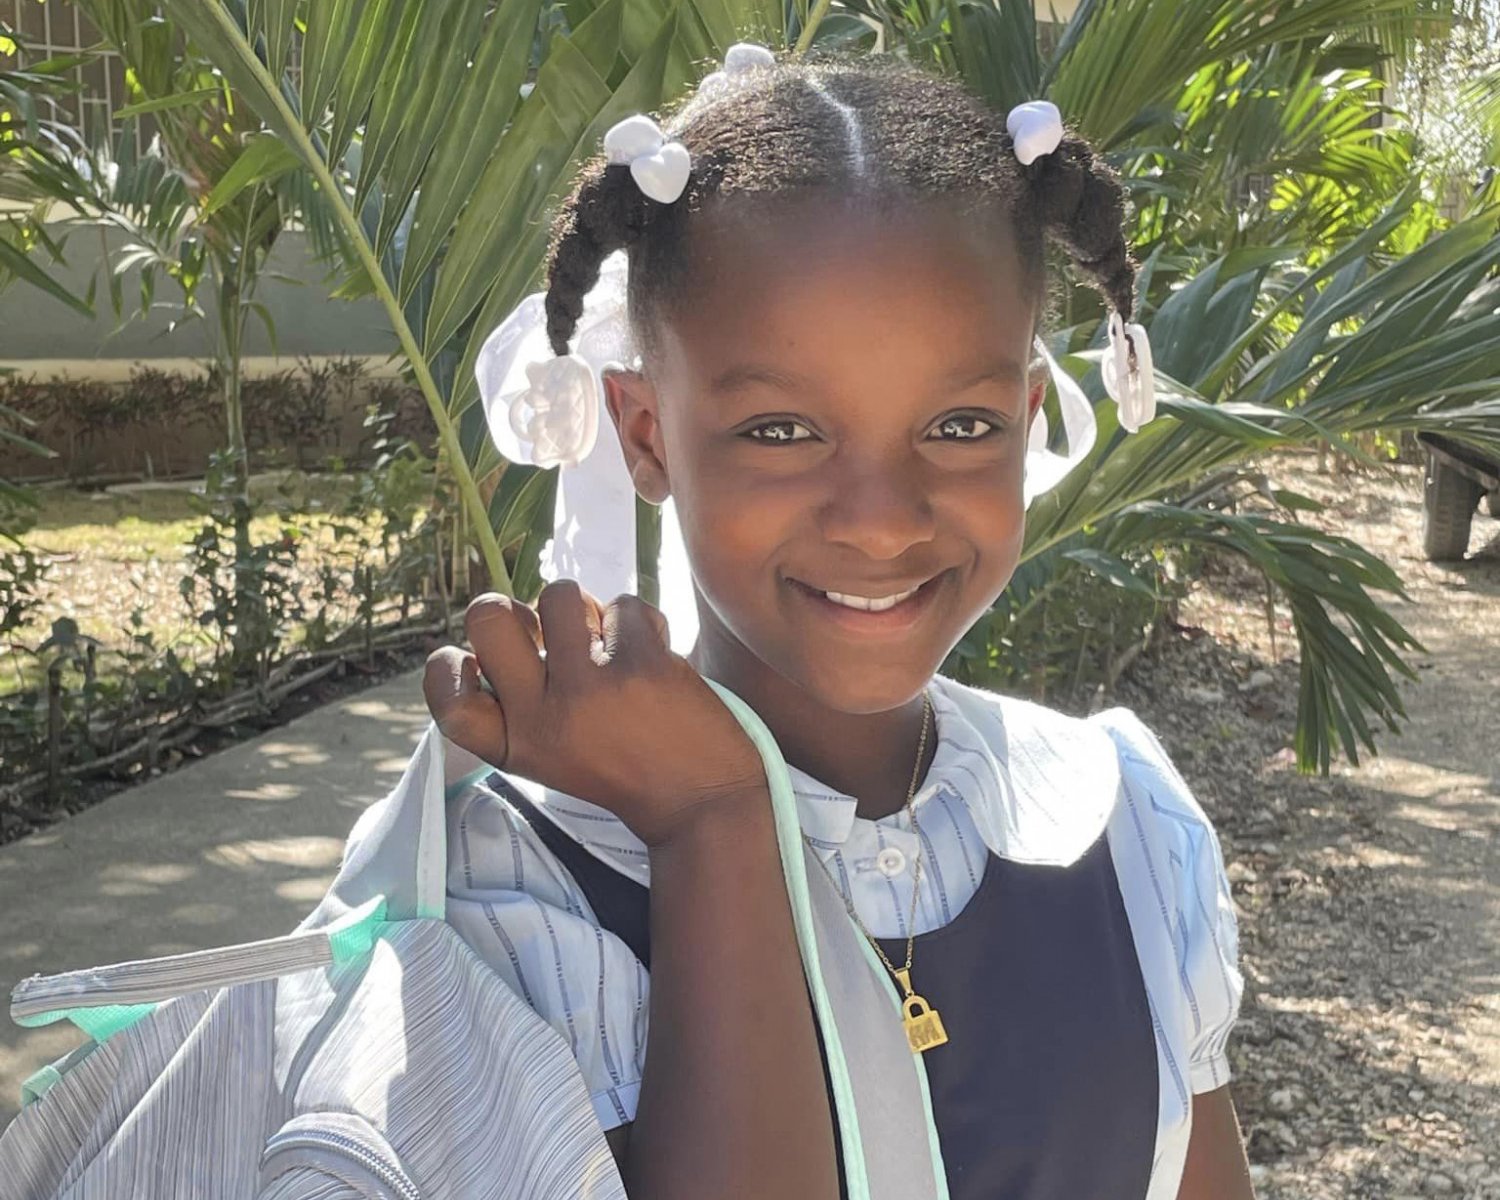 Haitian girl with education sponsorship